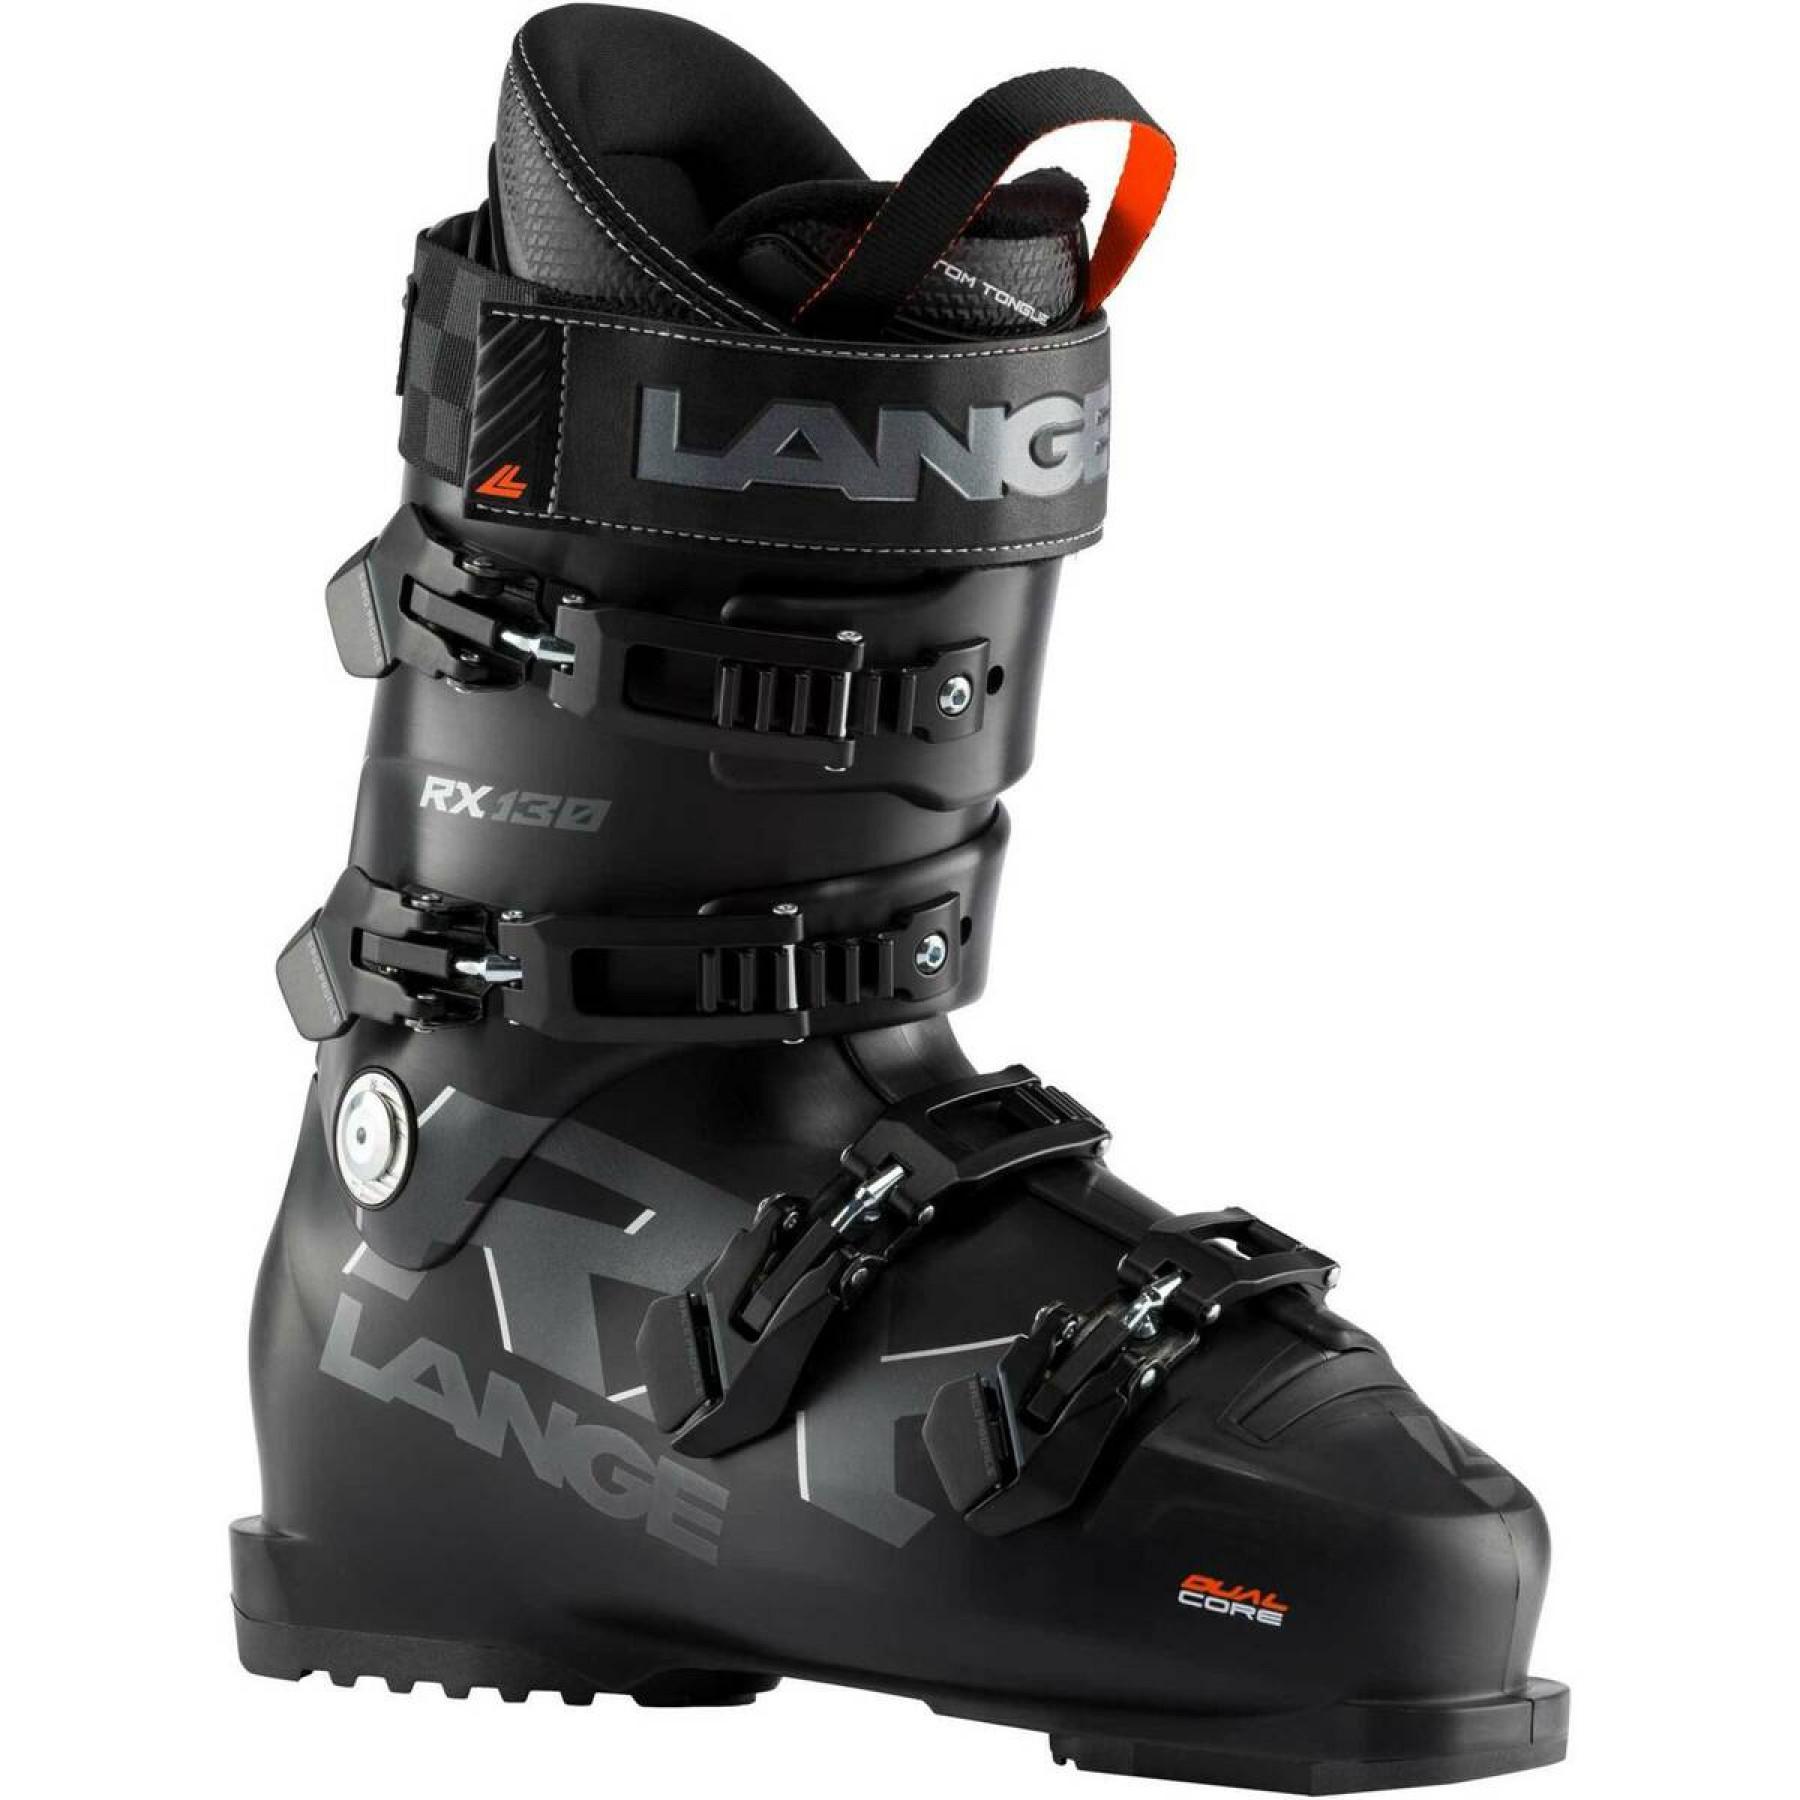 Buty narciarskie Lange rx 130